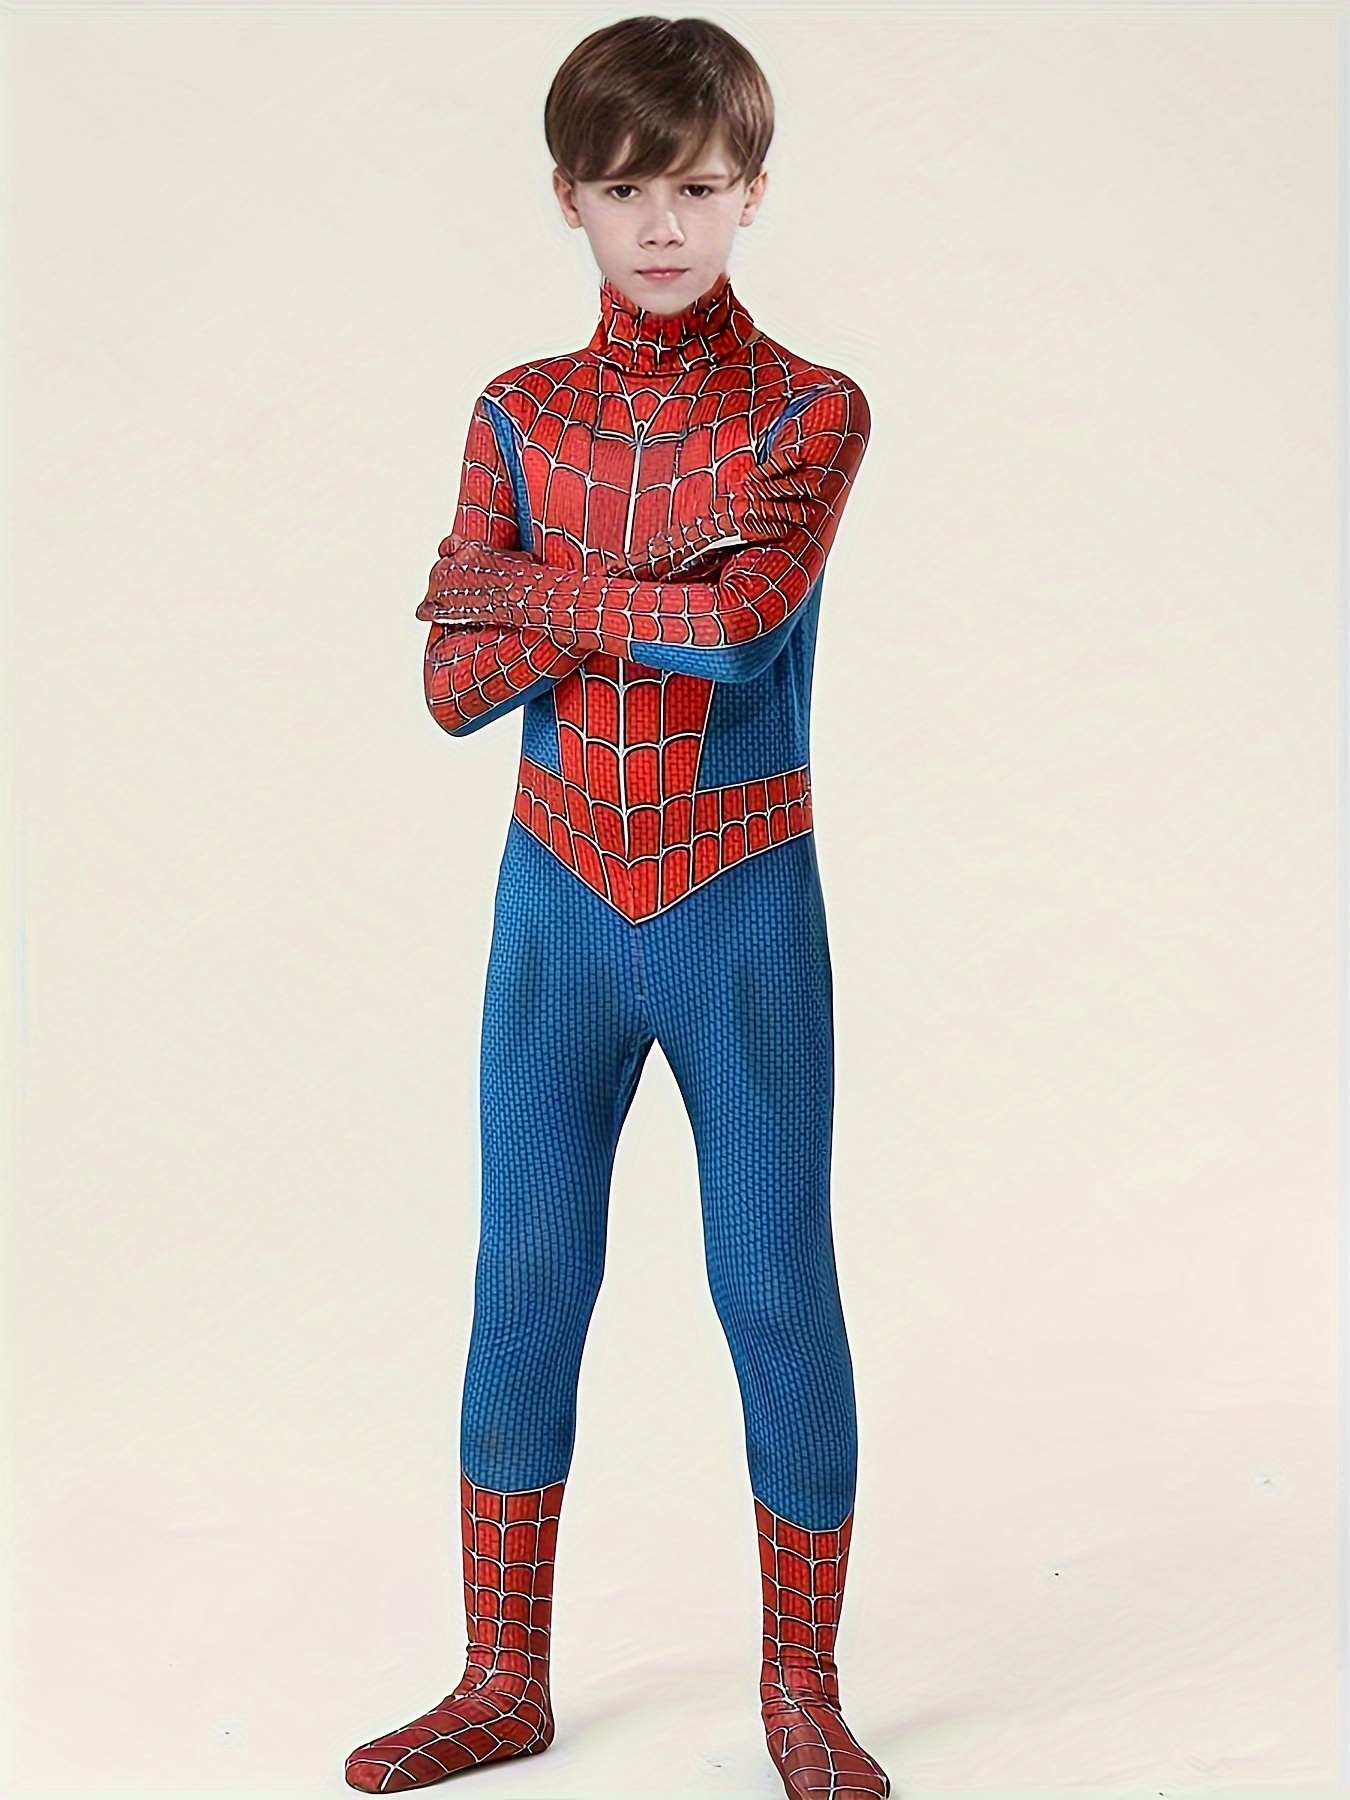 Pijama Entero Spiderman – Tan Flores